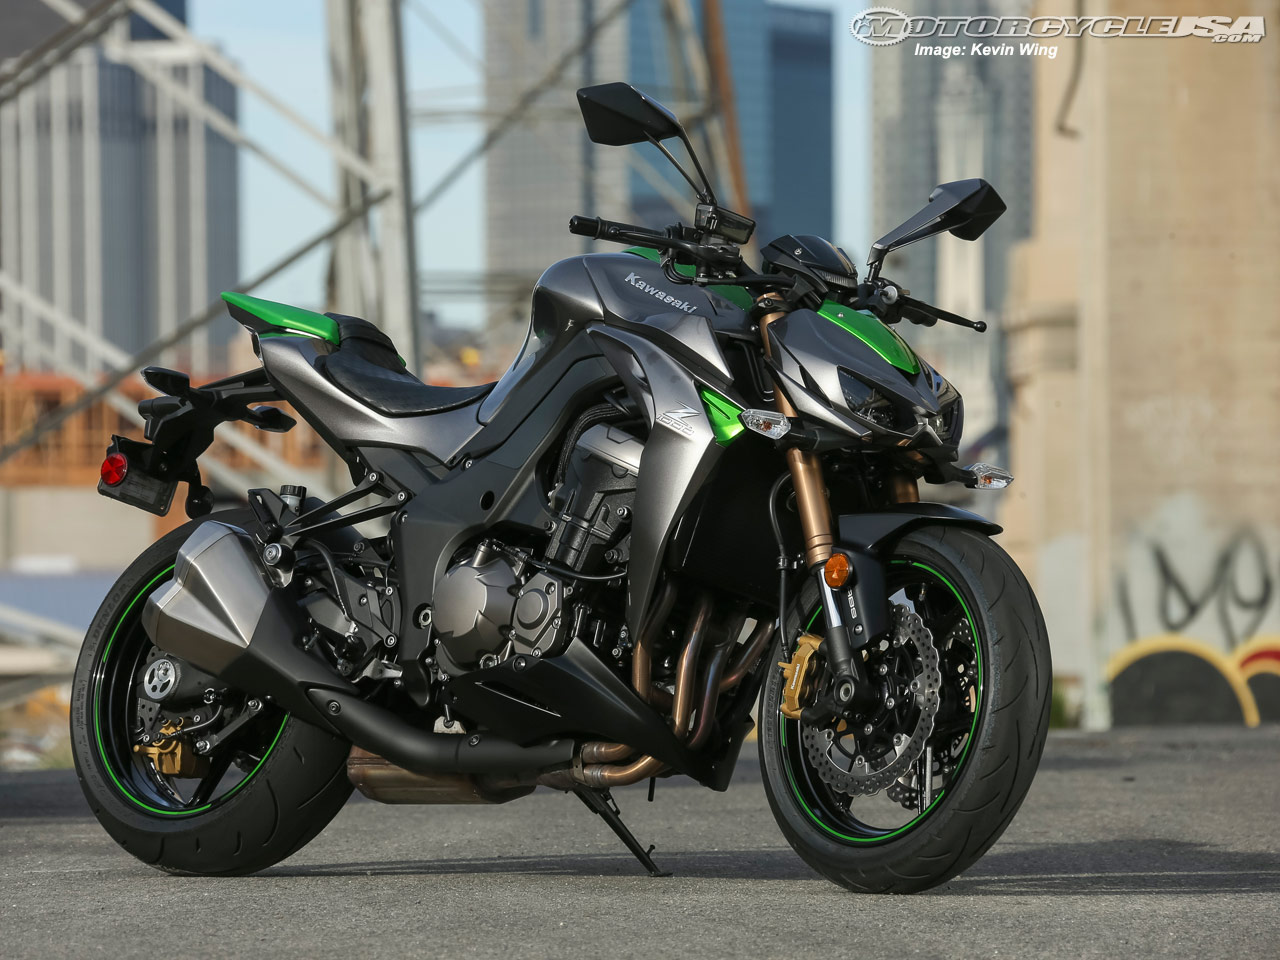 Kawasaki Z1000R Price | Mileage, Specs, Images of Z1000R - carandbike